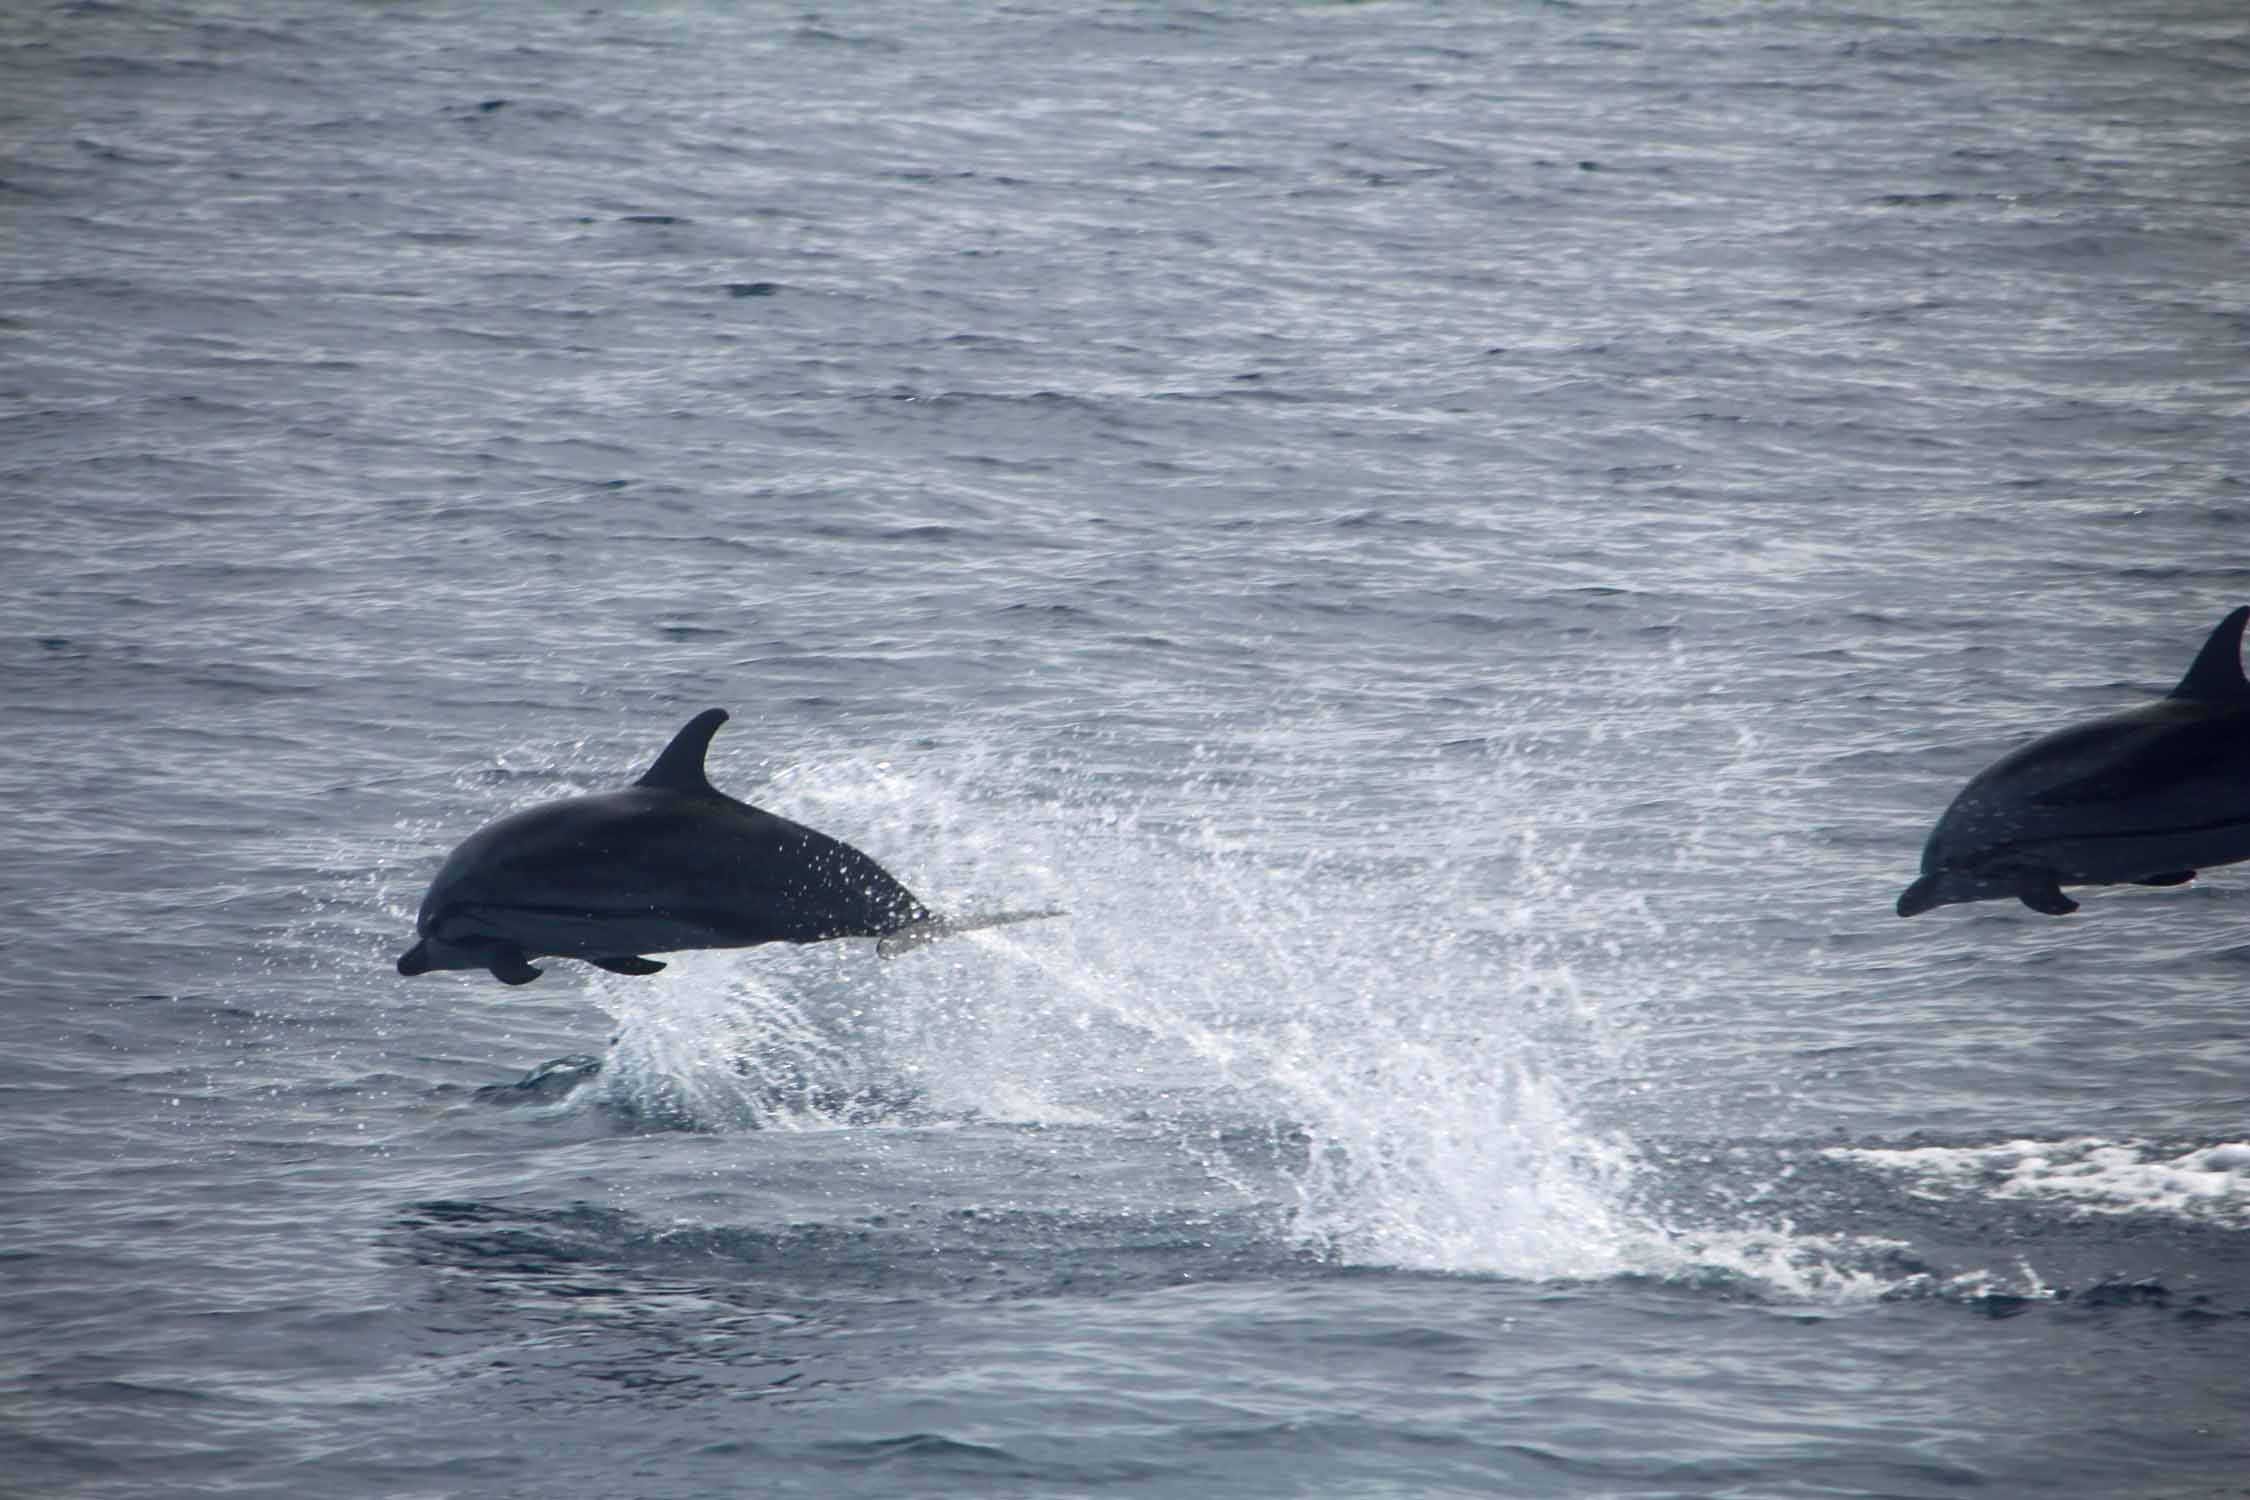 Açores, Île de Pico, Lajes do Pico, dauphins